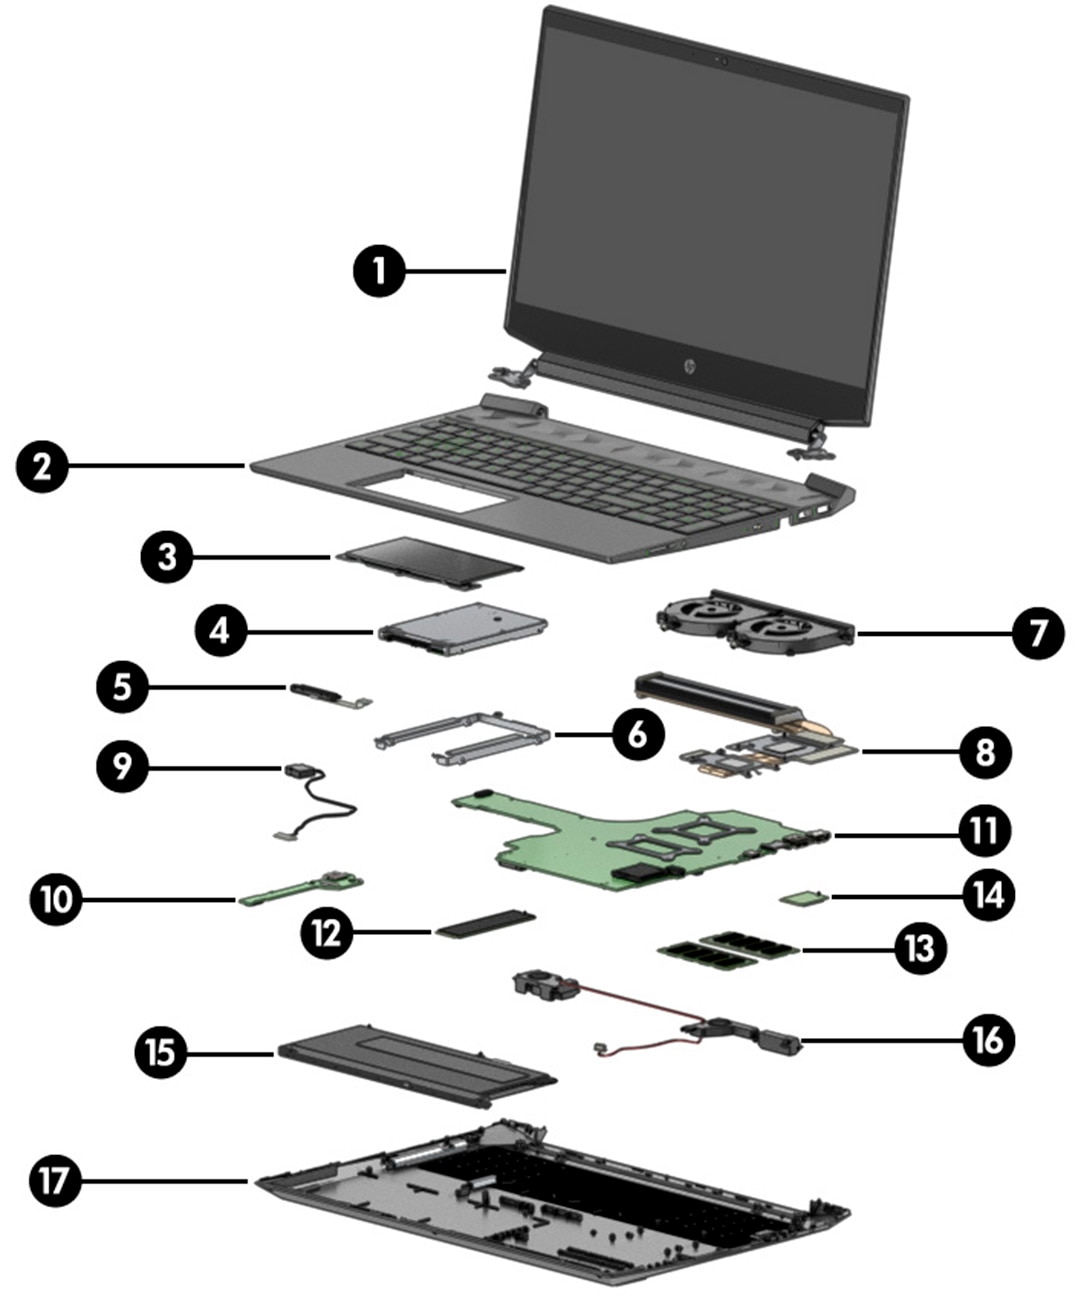 31+ Hp Laptop Parts Diagram Pics - Wiringdiagram.my.id